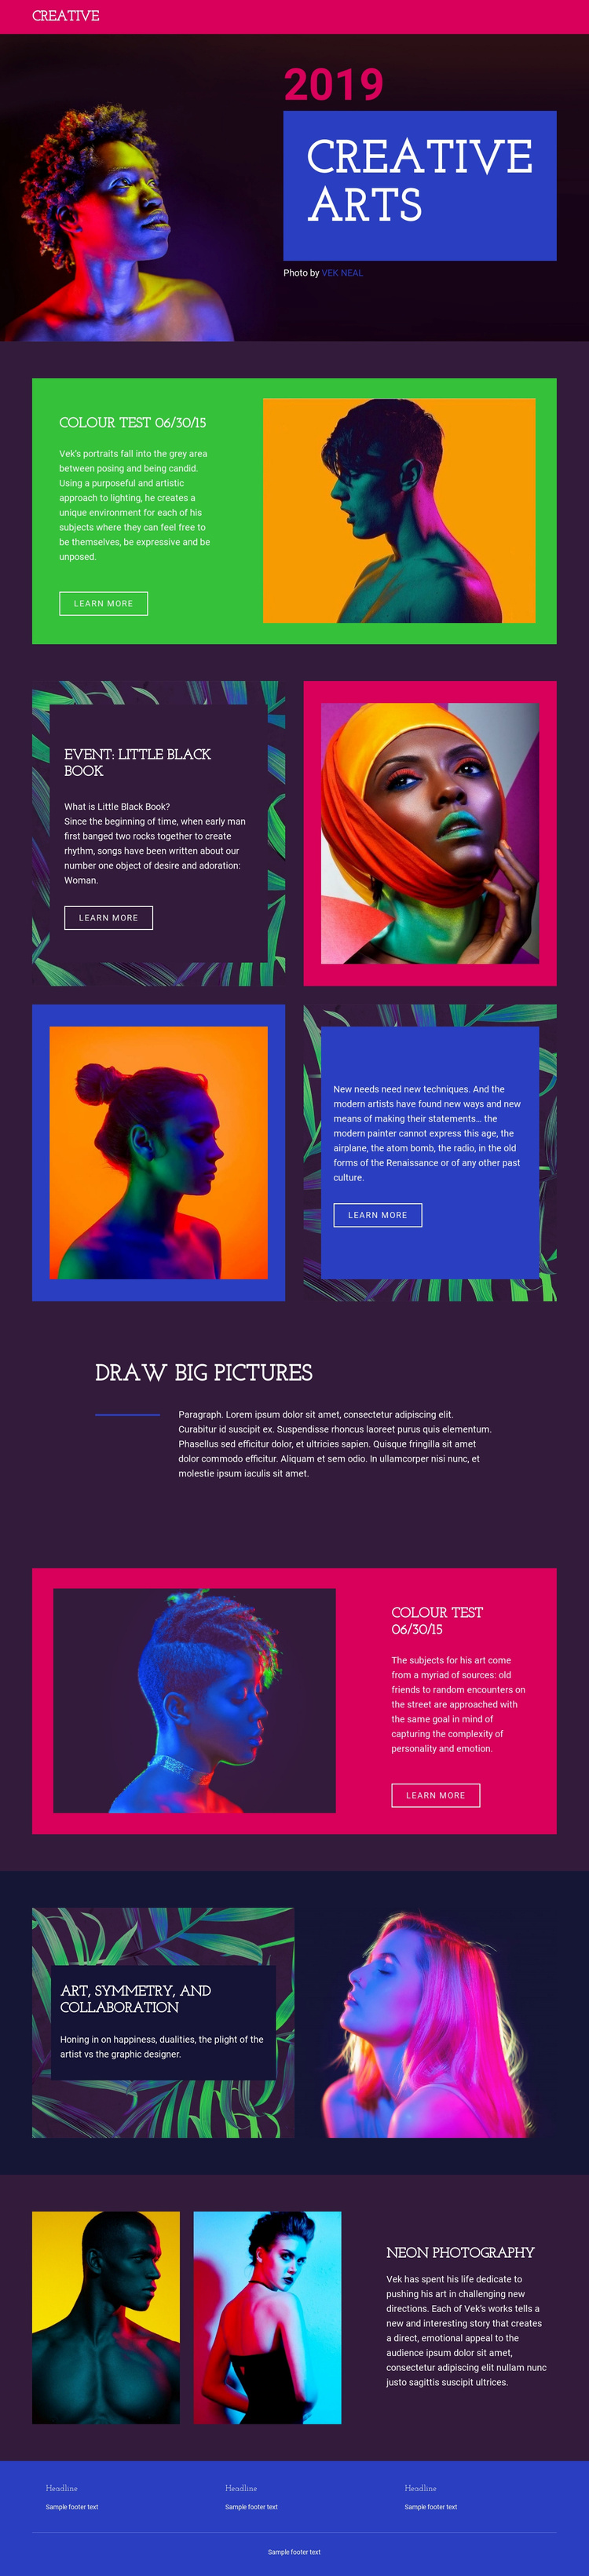 Creative Arts Landing Page